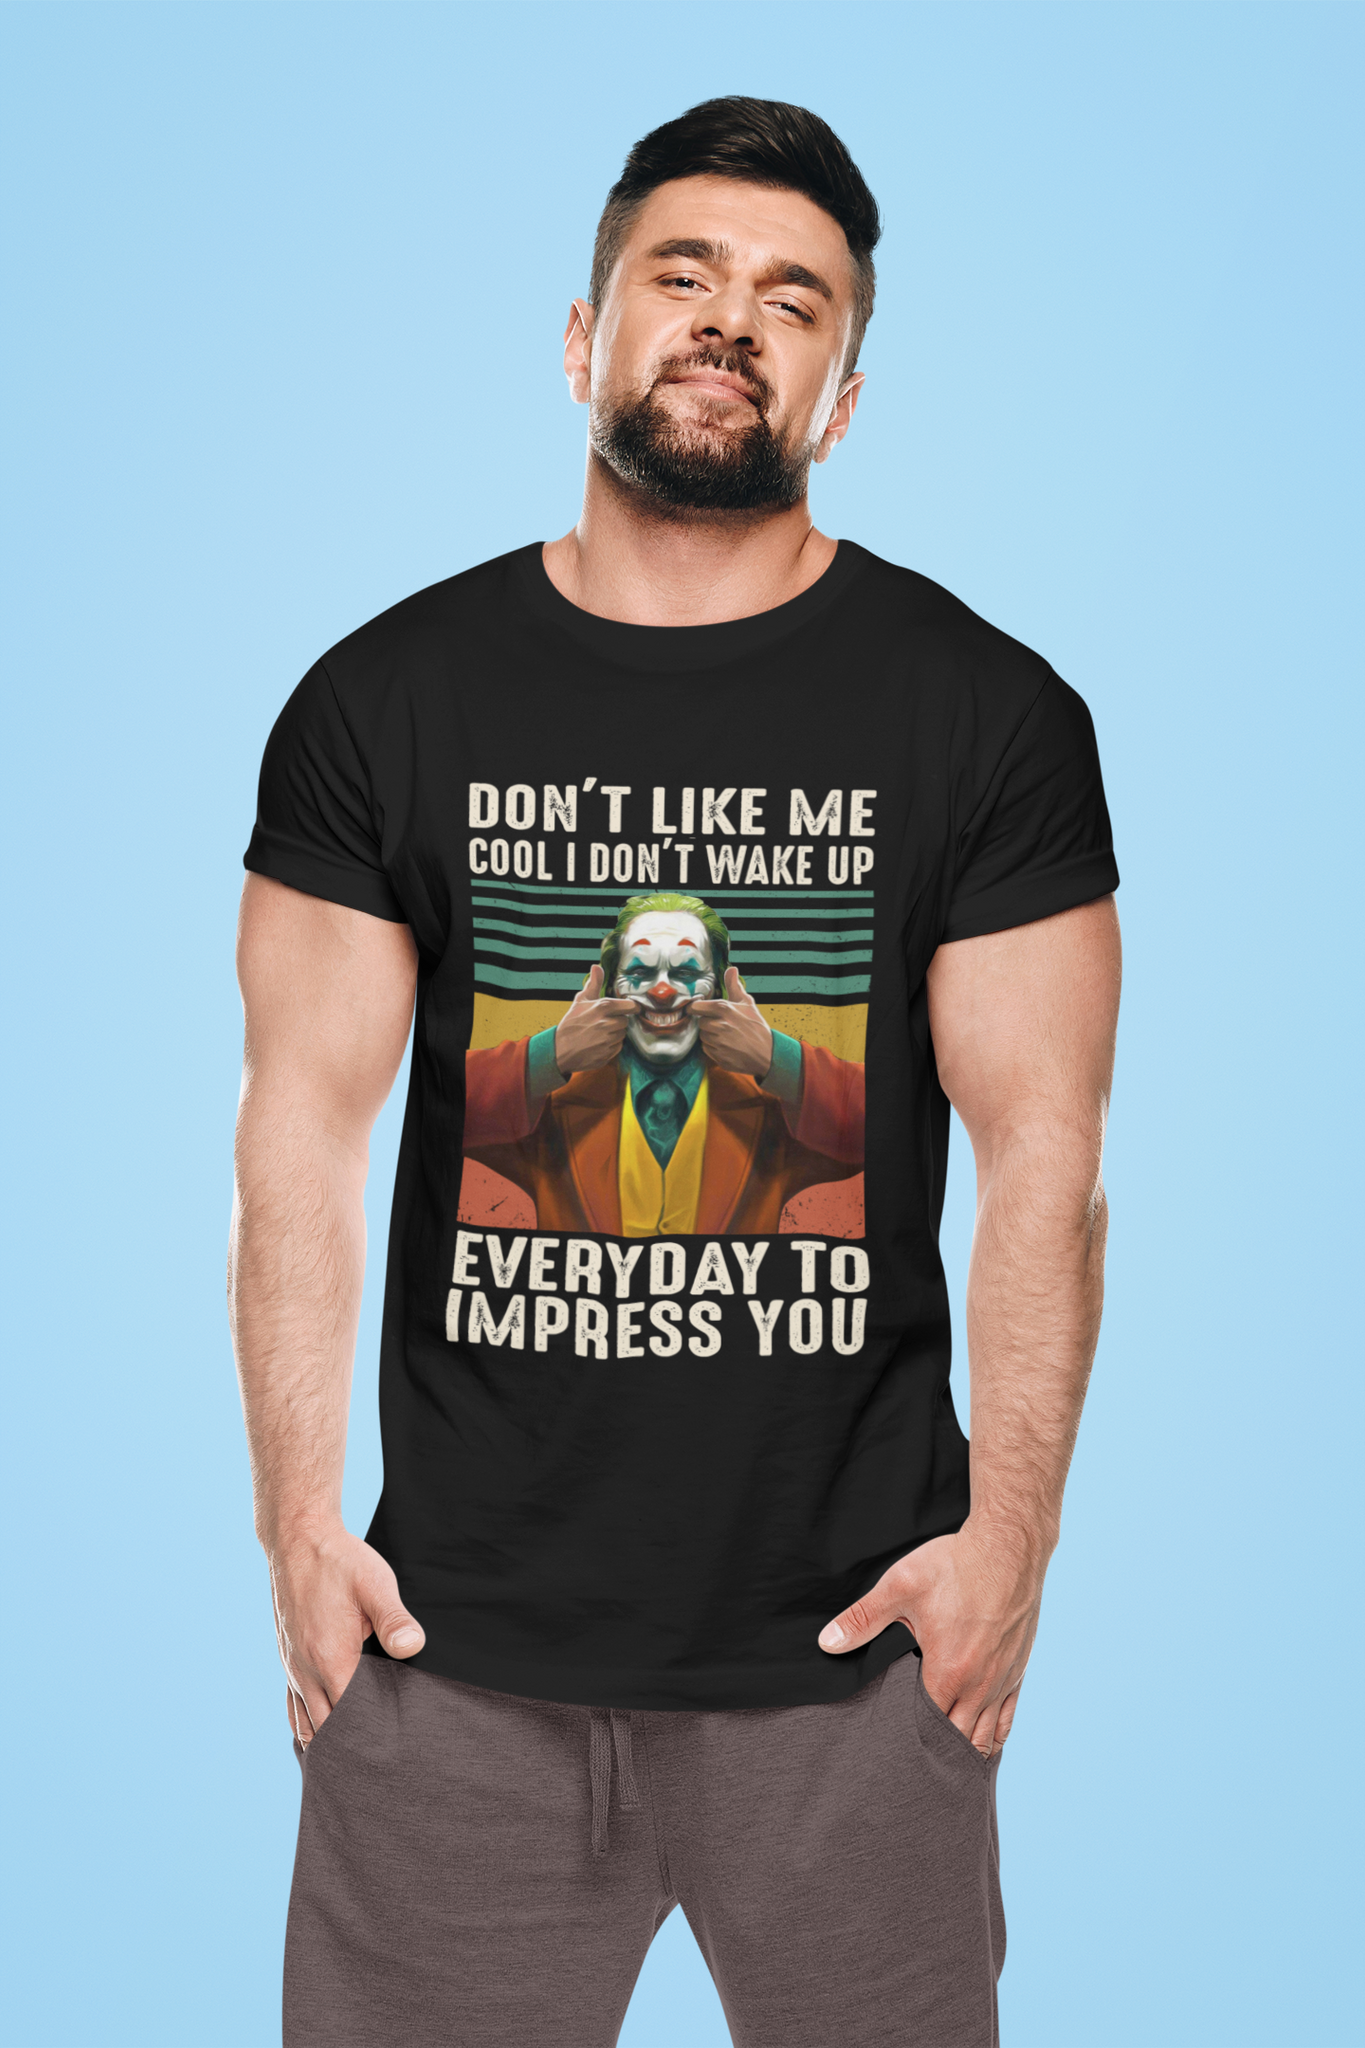 Joker Vintage T Shirt, Joker The Comedian T Shirt, Dont Like Me Cool I Dont Wake Up Tshirt, Halloween Gifts